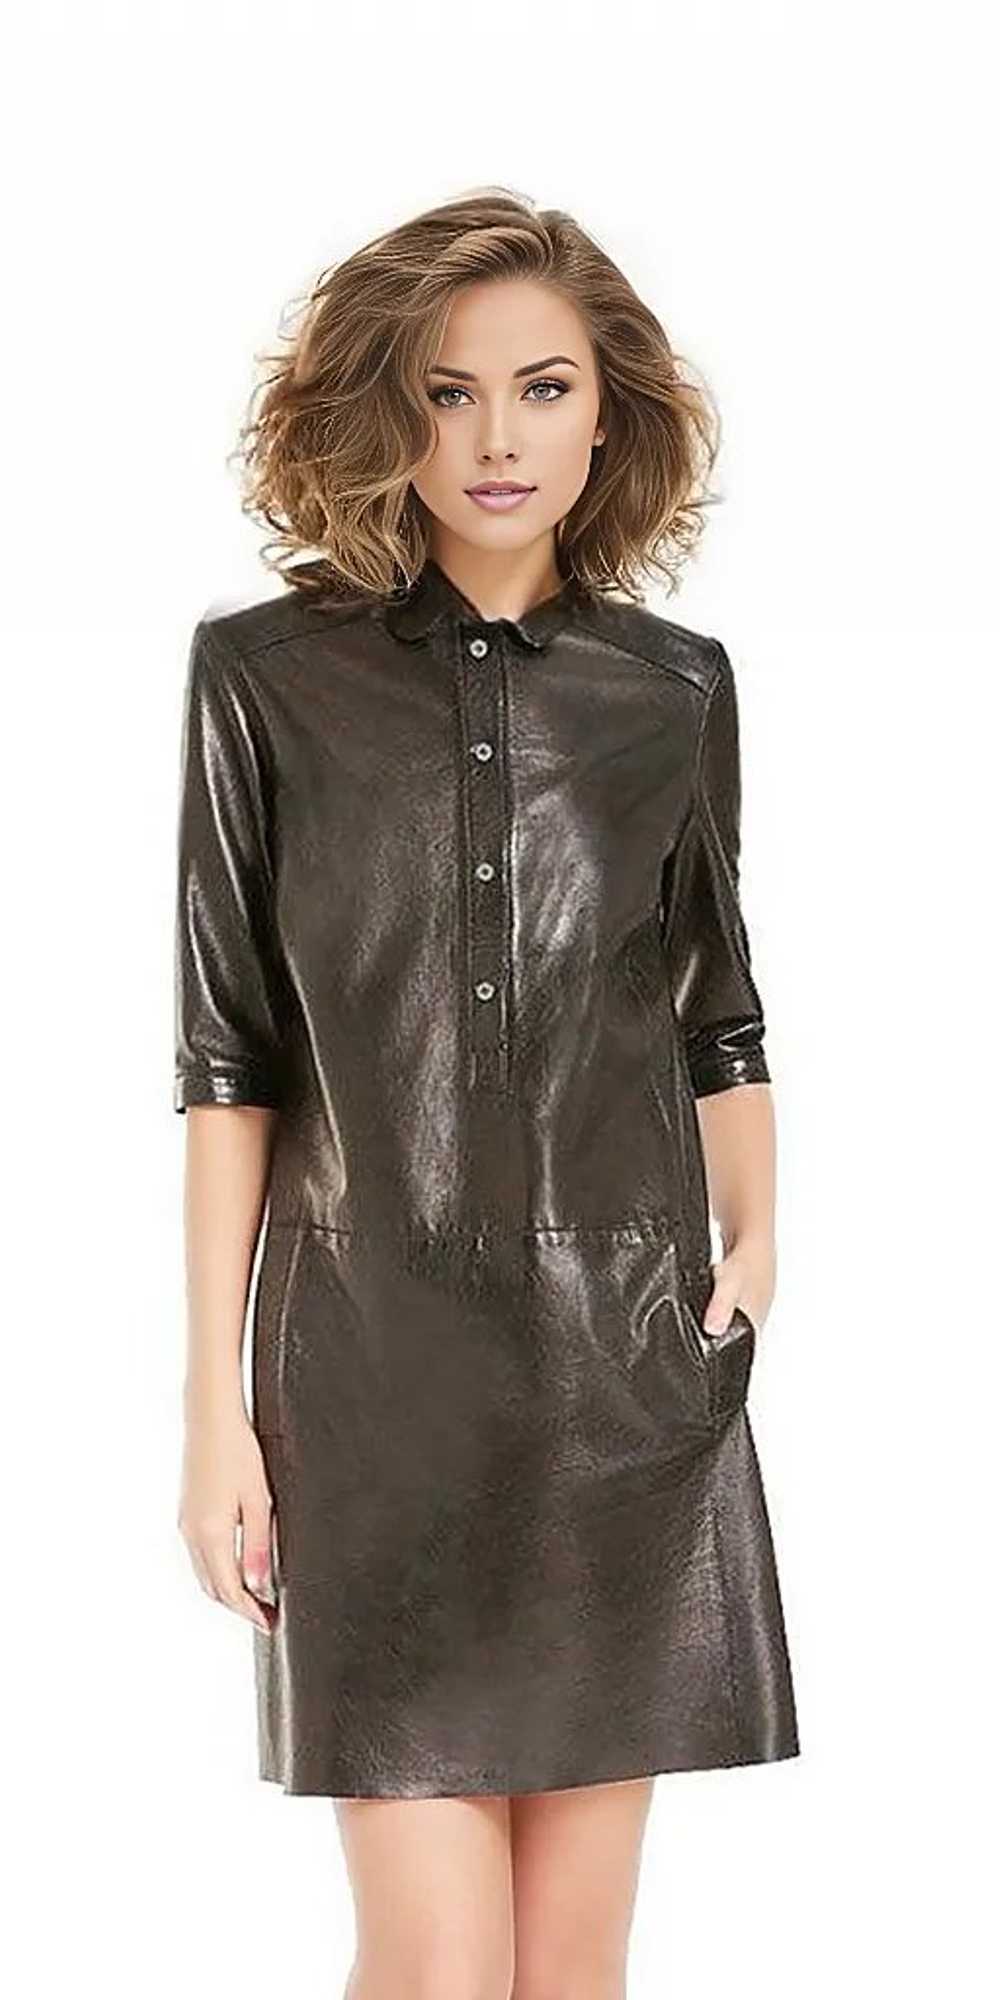 Solange Womens Sheepskin Leather Dress - image 1